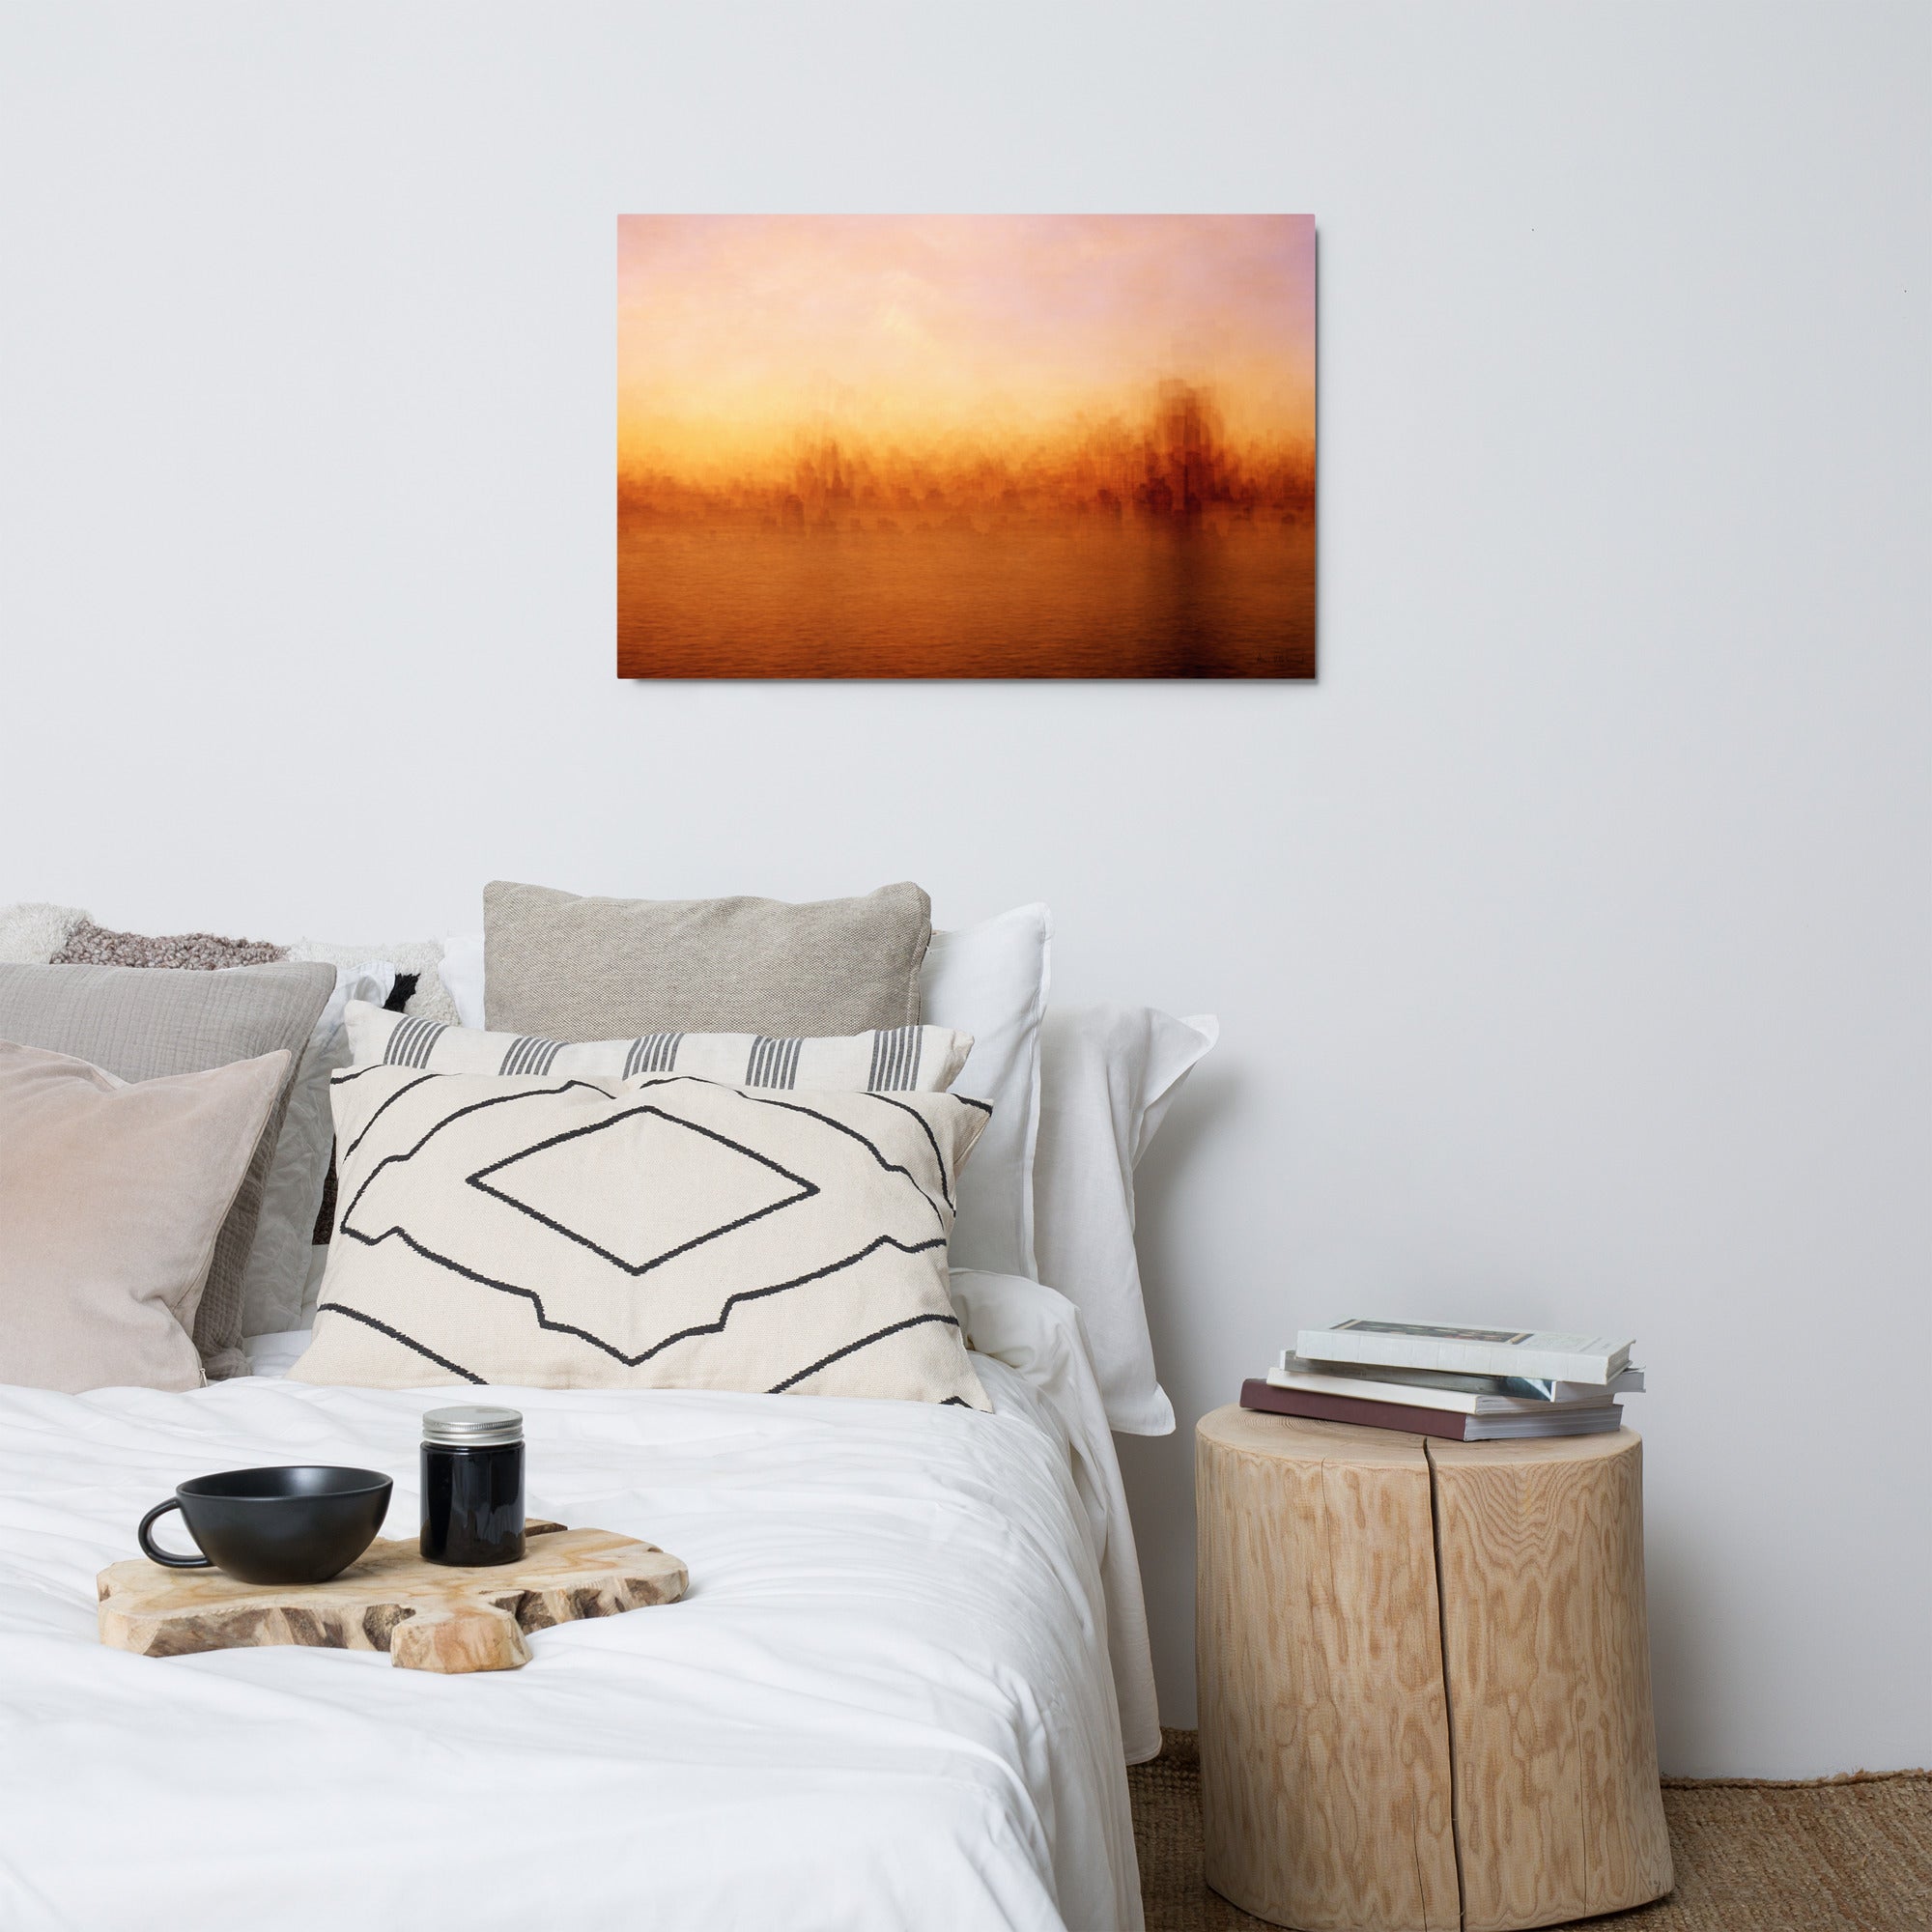 central park reservoir sunset impressionistic photograph Metal prints